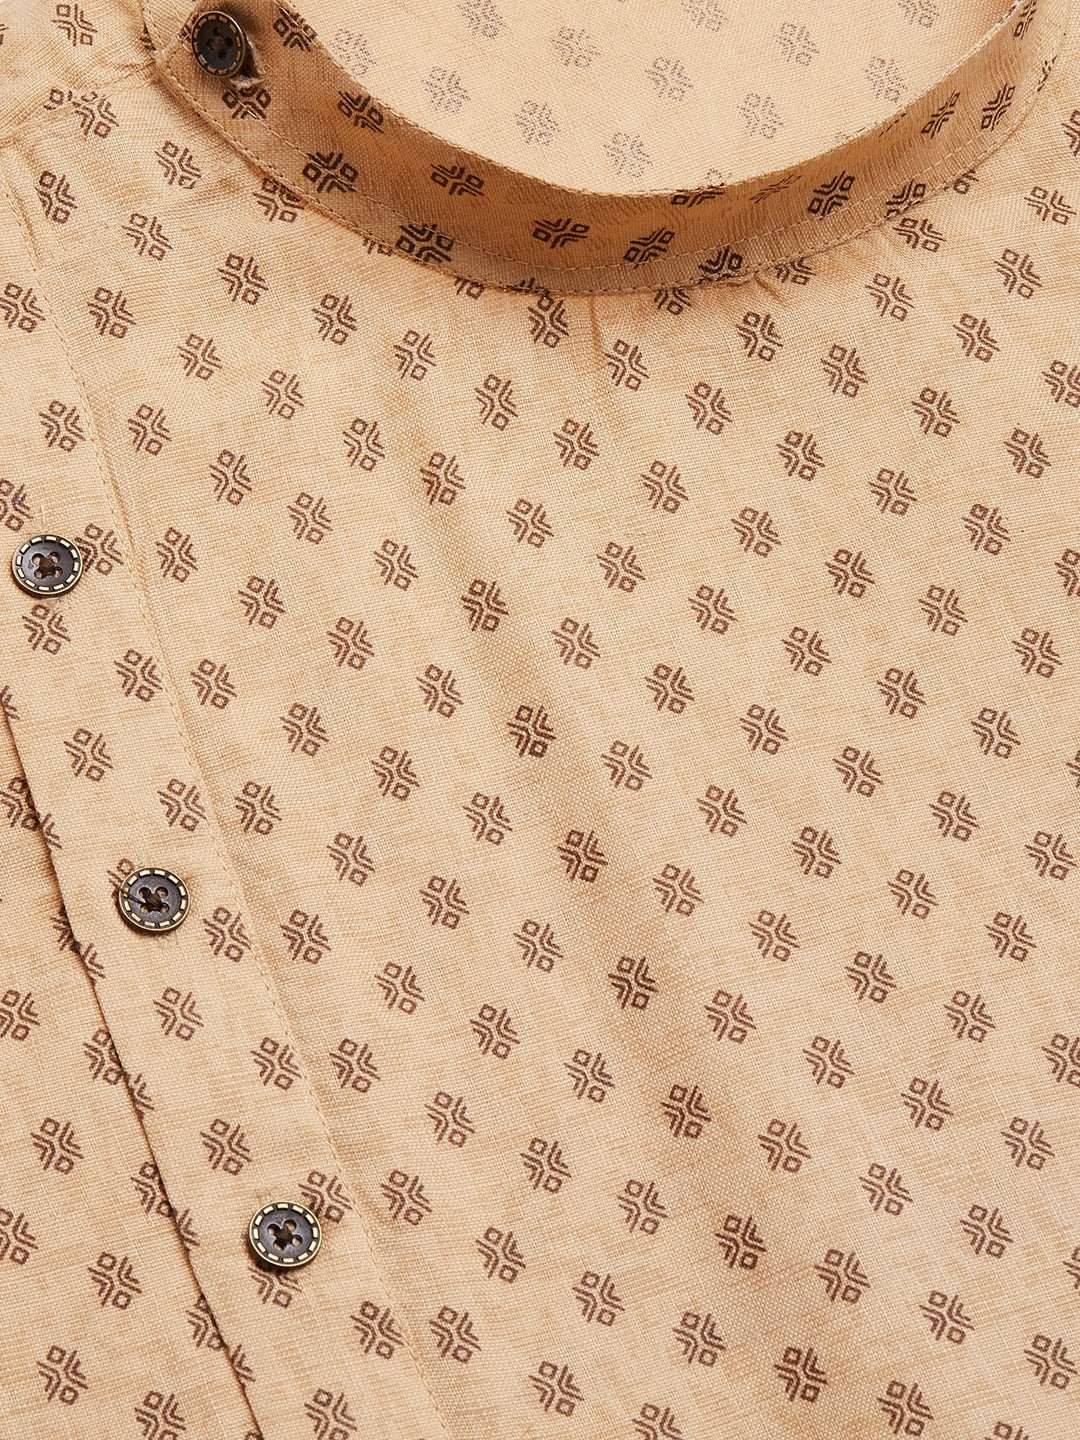 Jompers Men's Beautiful Beige Cotton printed kurta Only